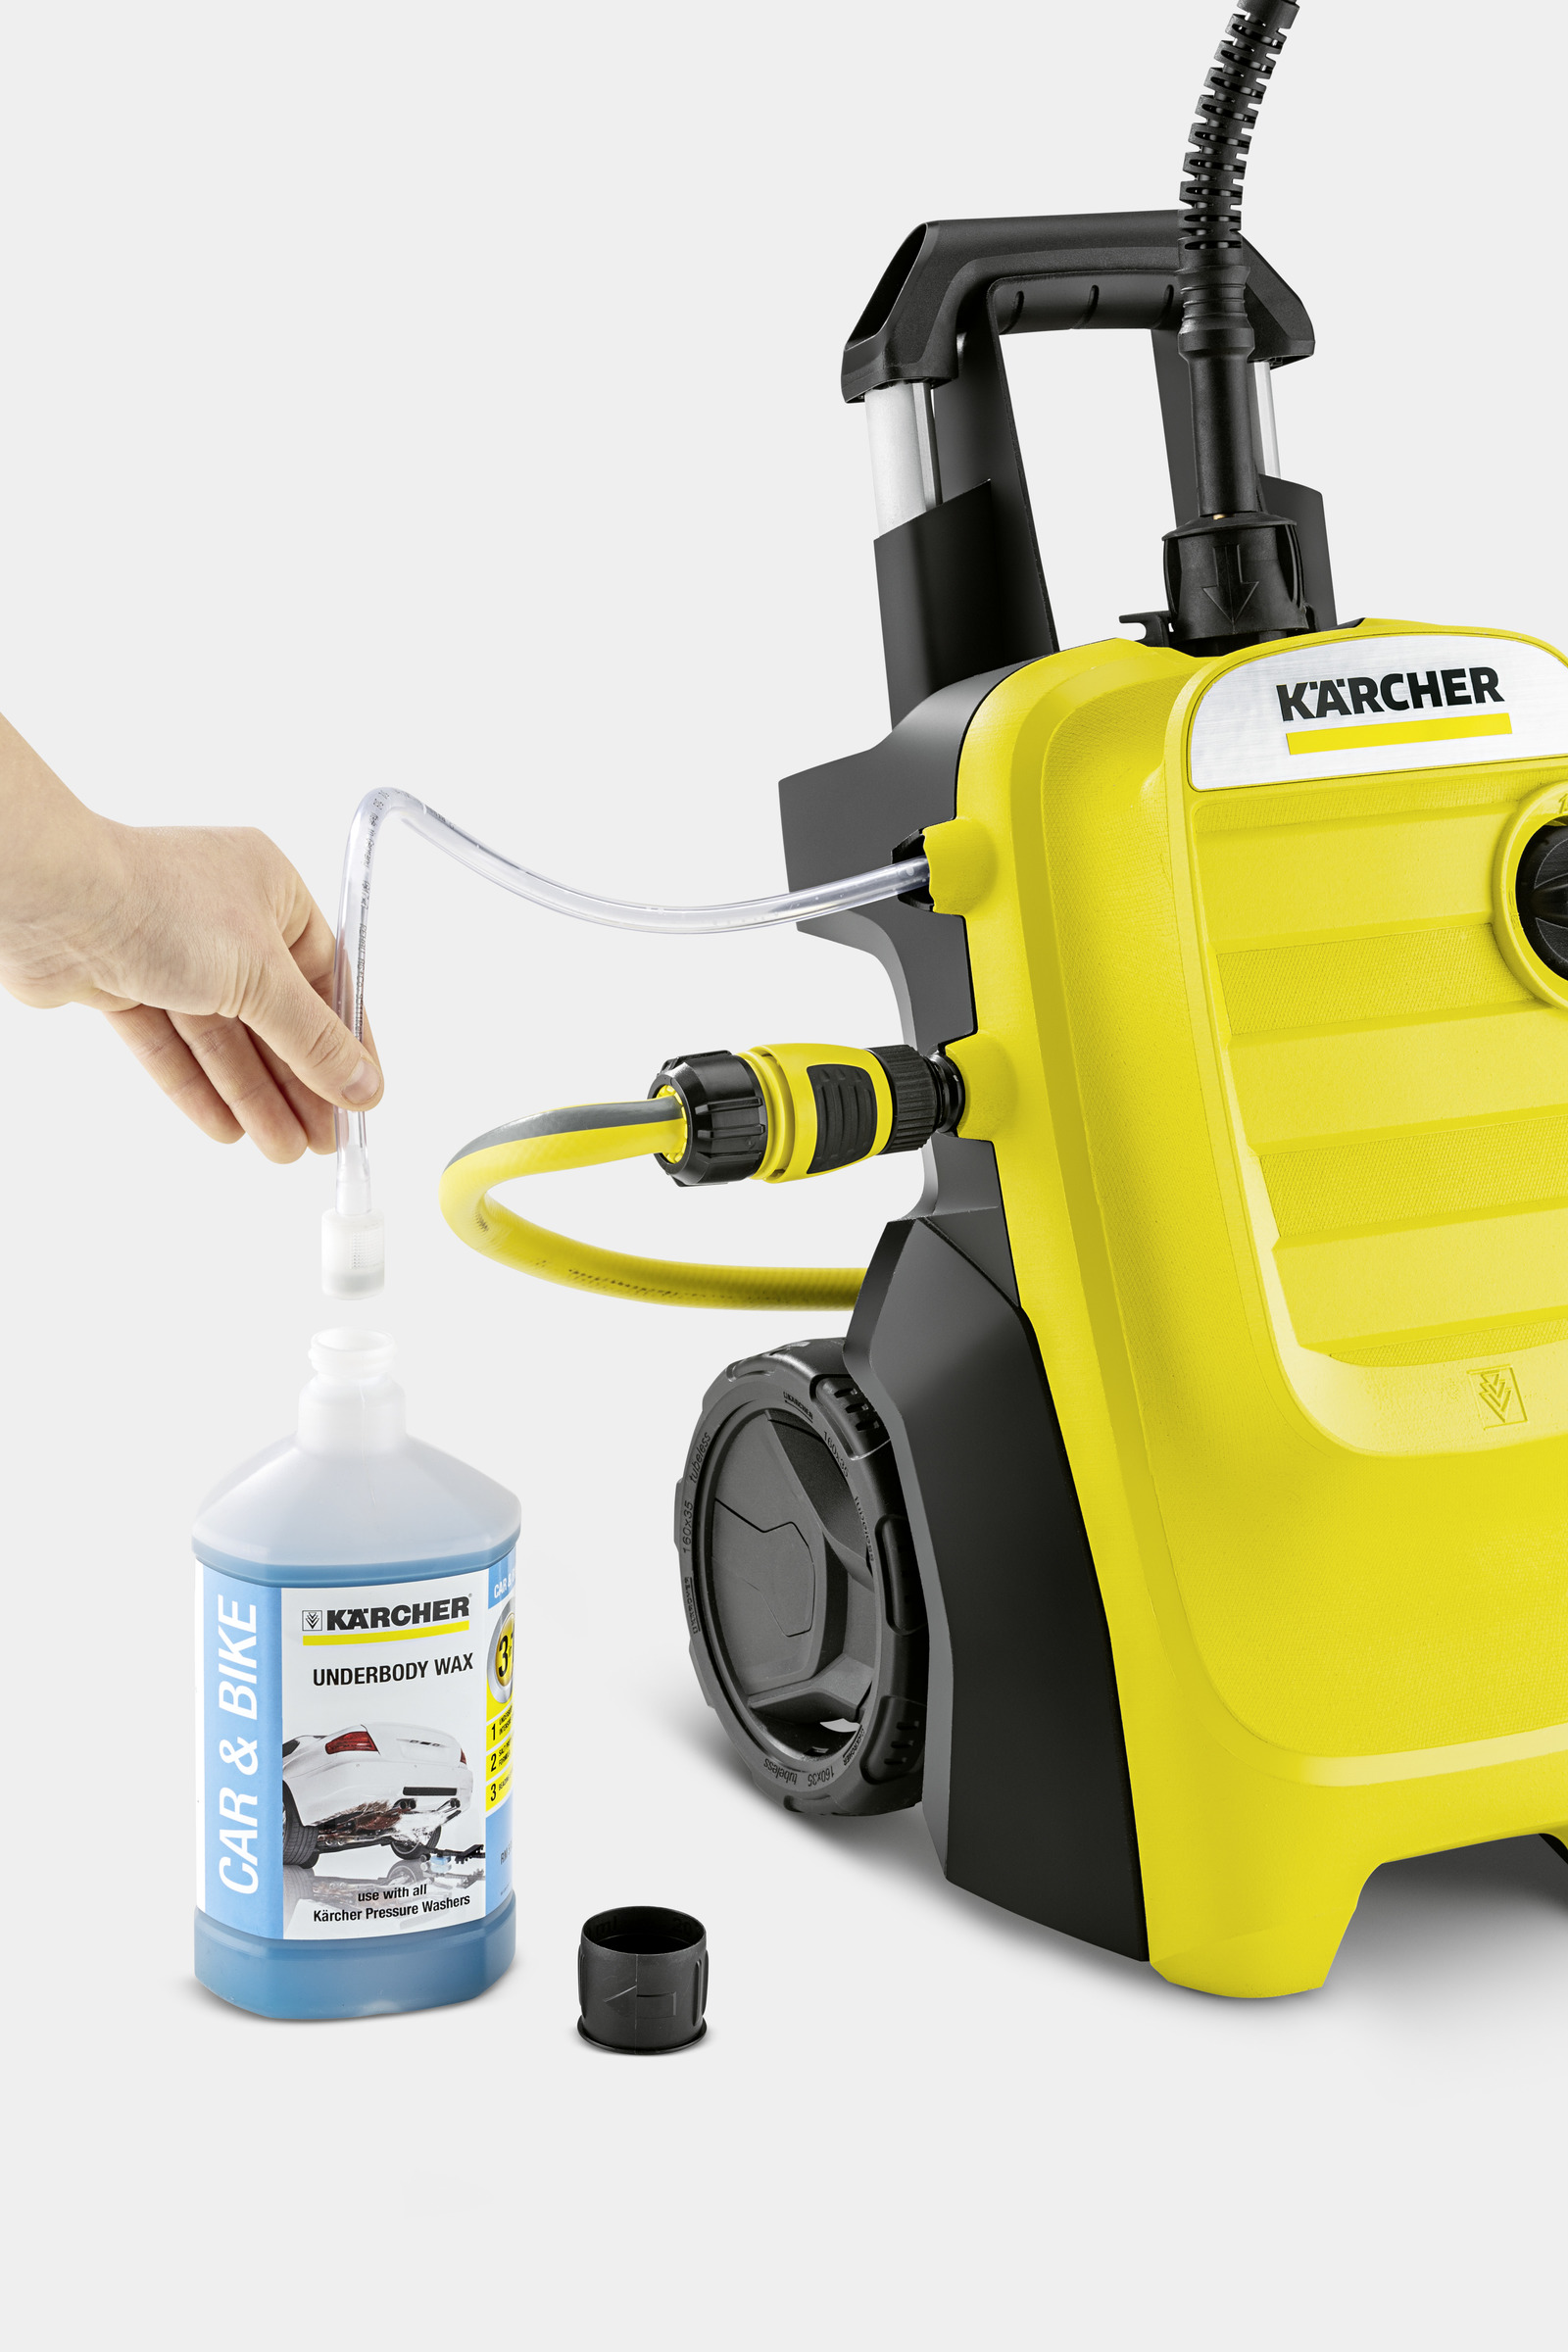 KARCHER K4 COMPACT HIGH PRESSURE CLEANER 130BAR 1800W